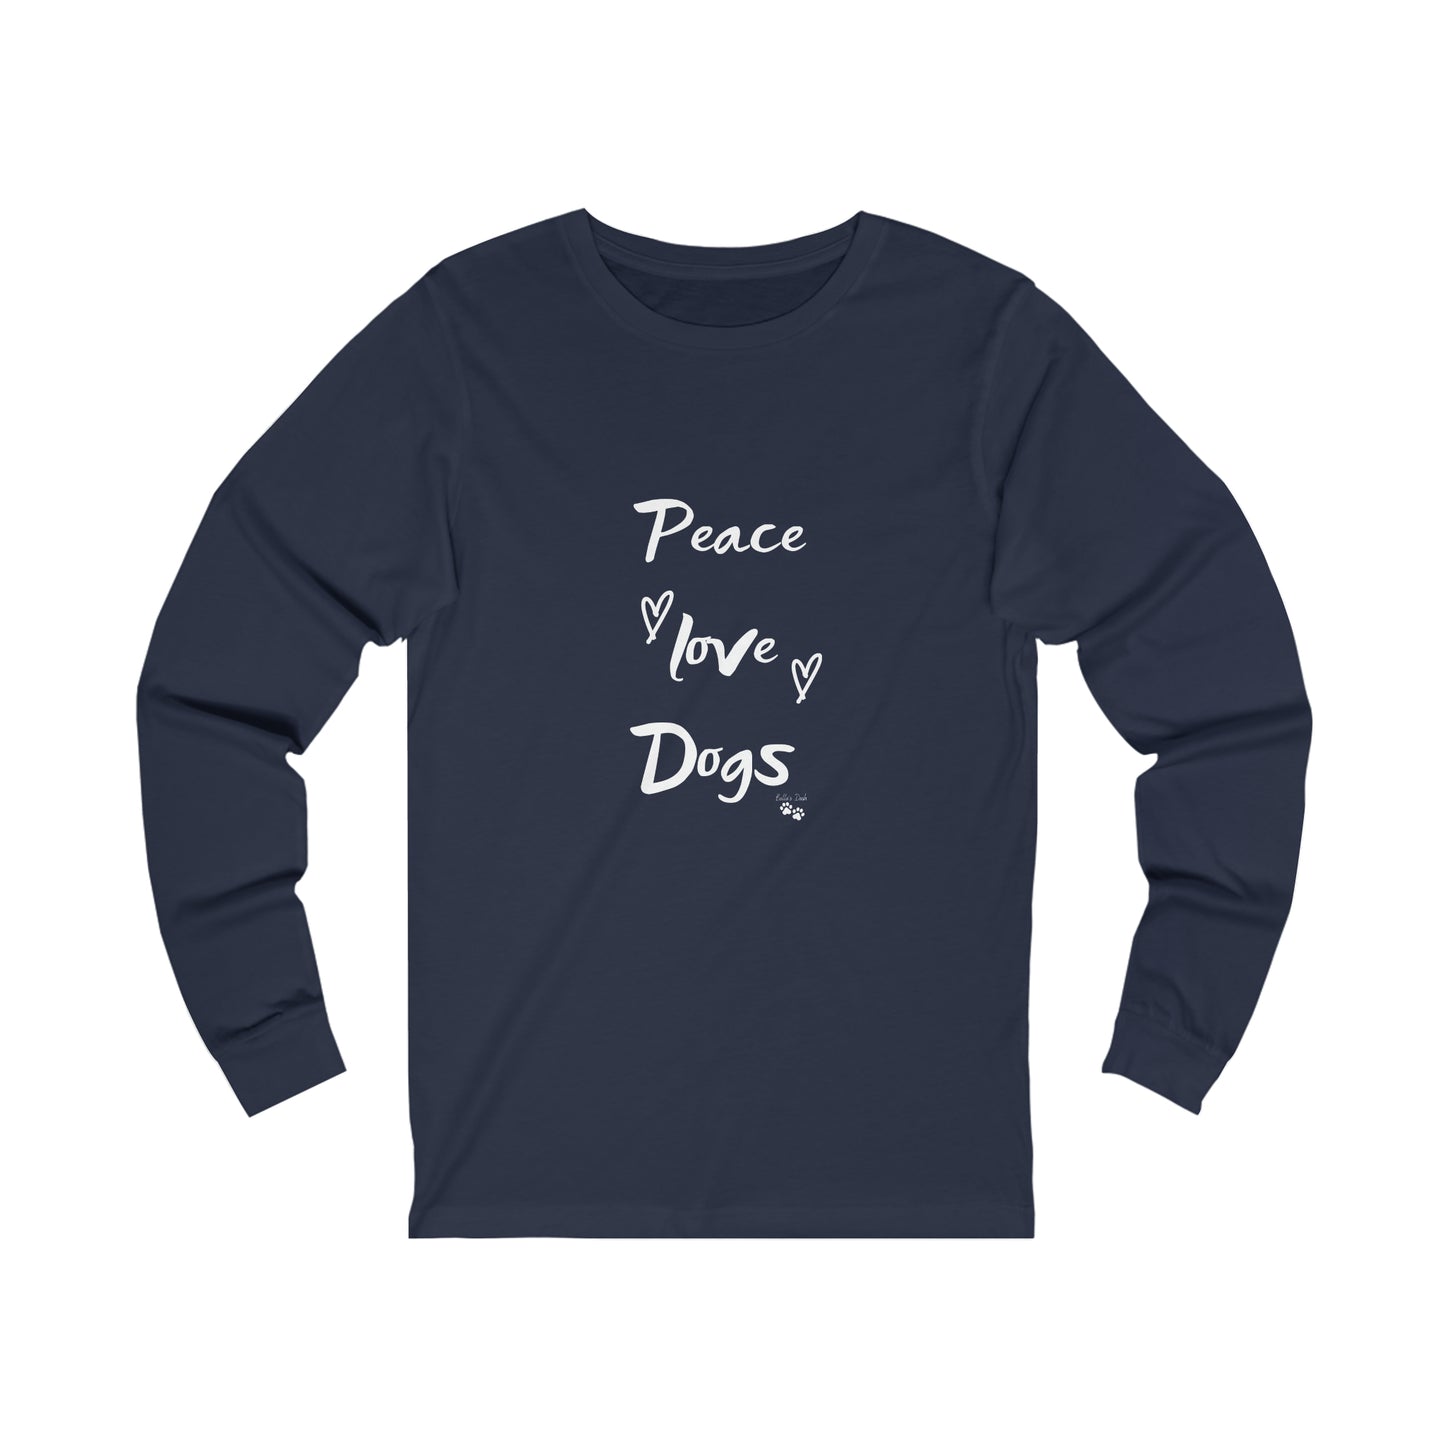 Peace love Dogs Jersey Long Sleeve Tee